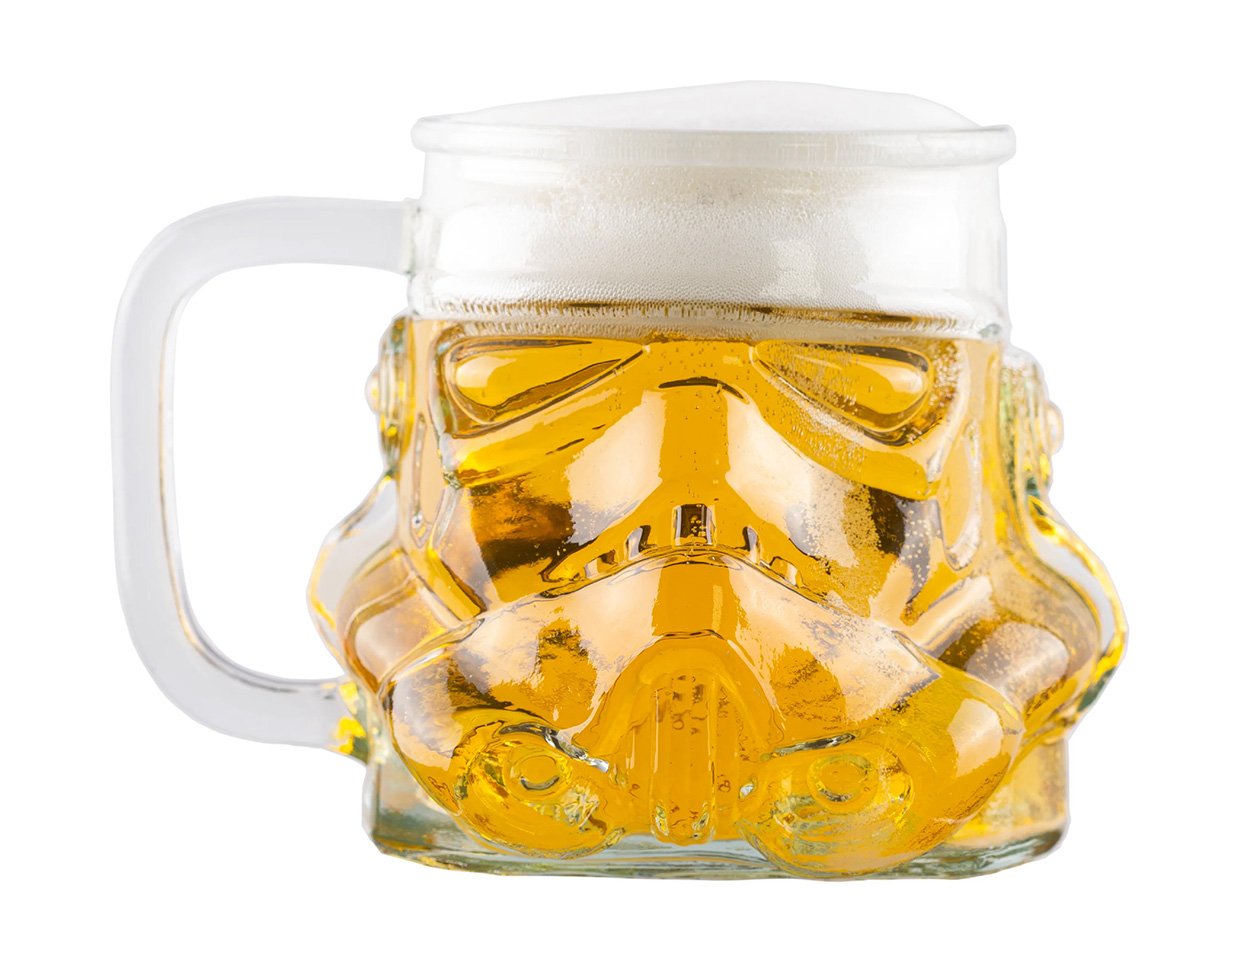 Star Wars Stormtrooper Beer Mug: The Drink You're Looking For